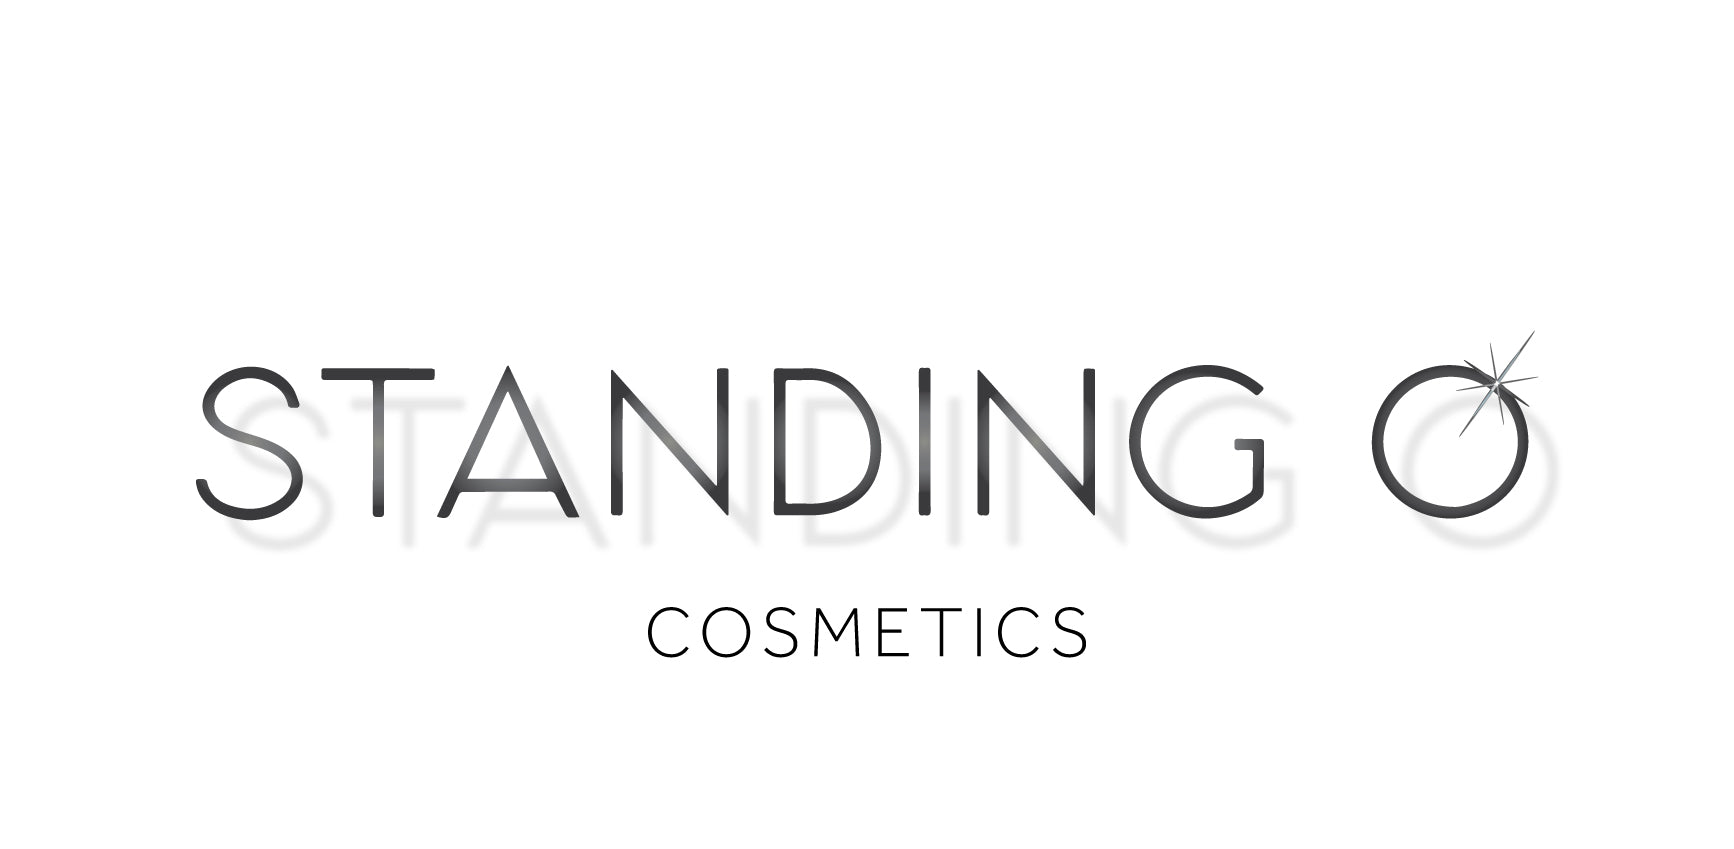 & cosmetics logo png